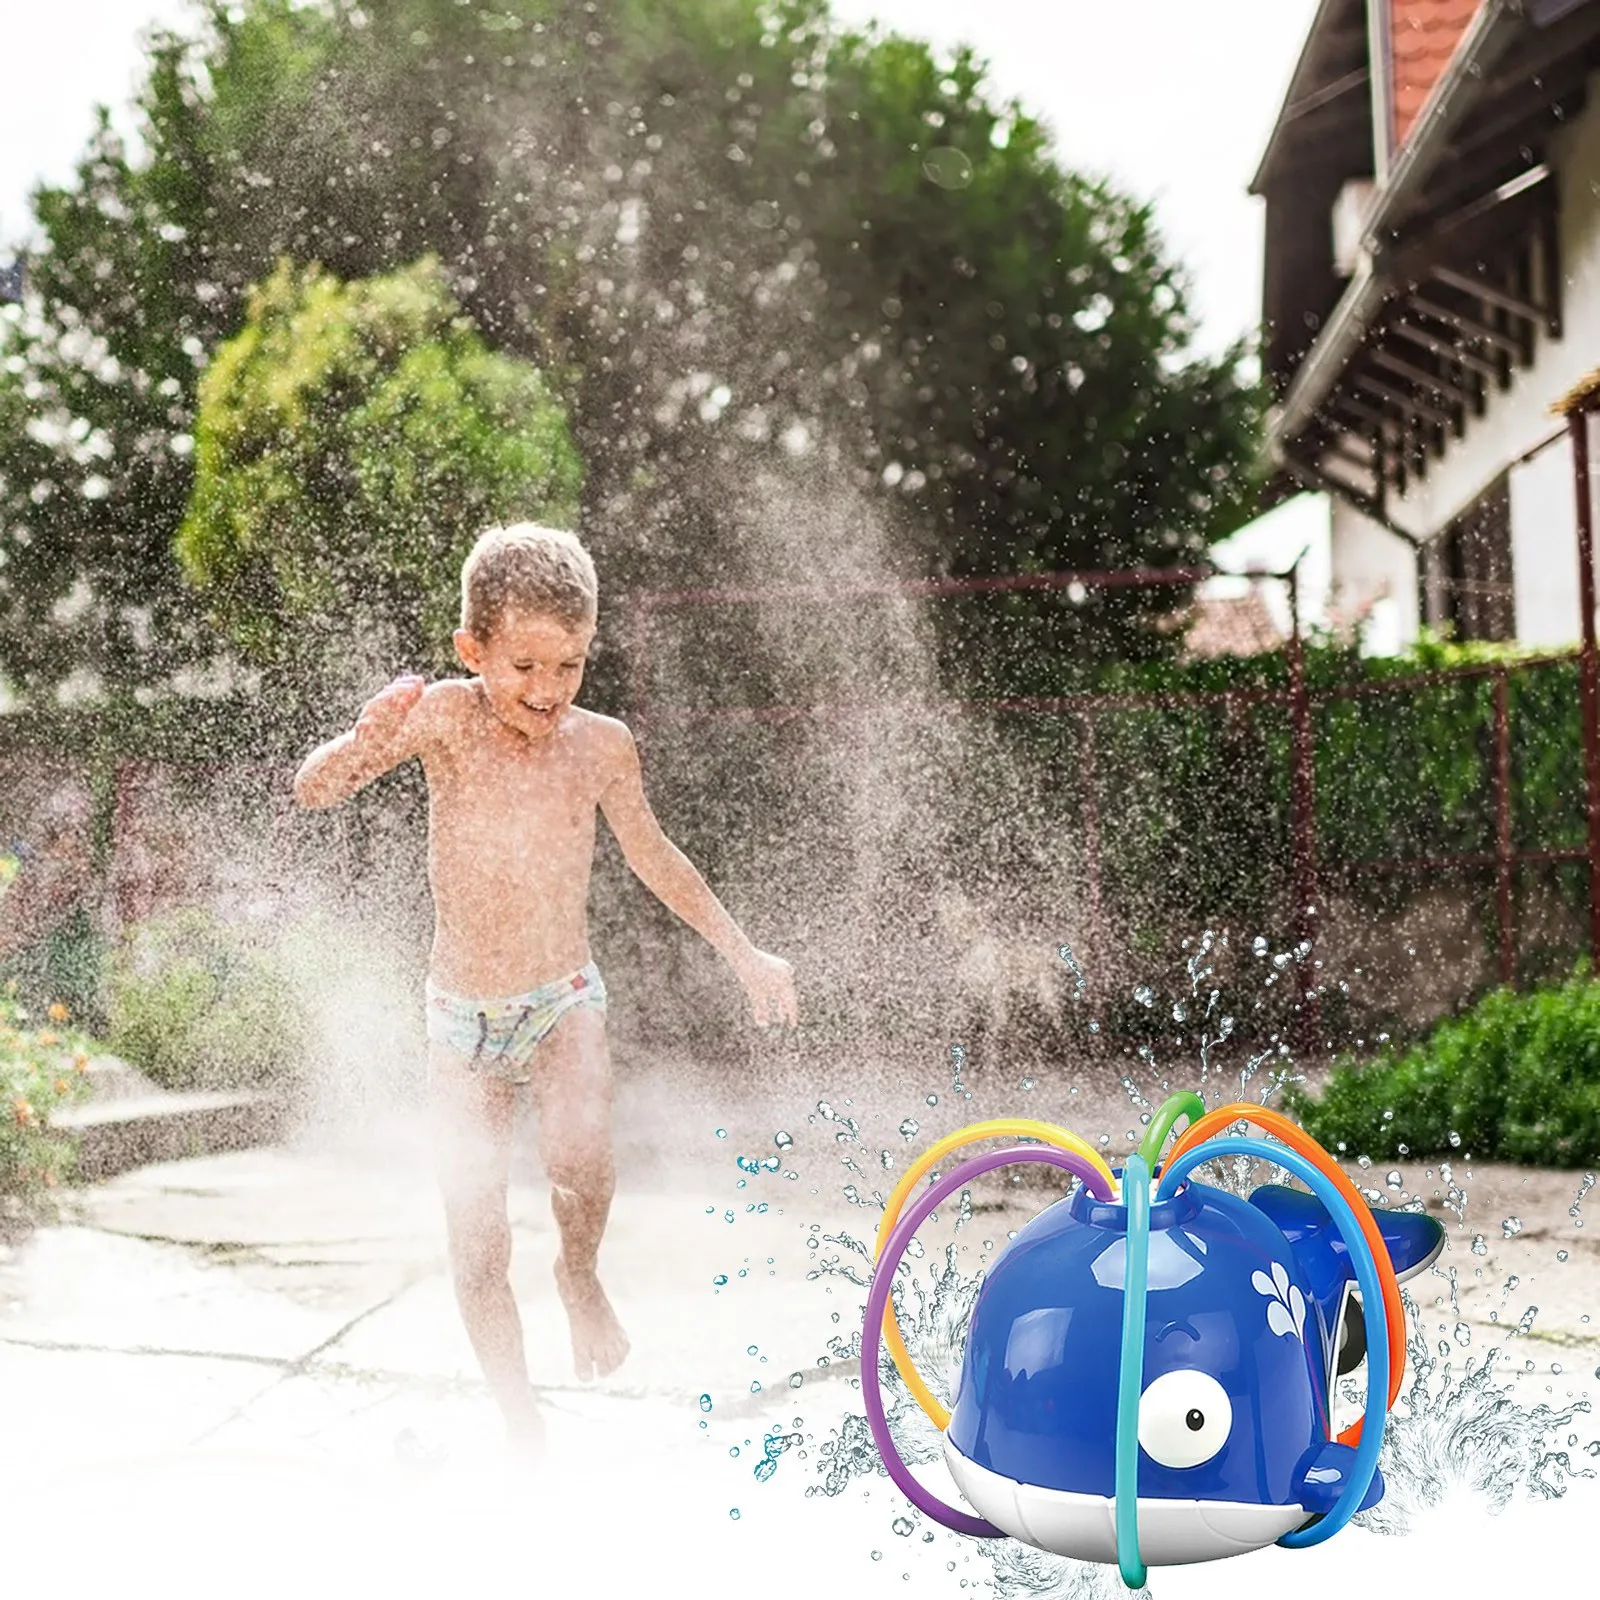 

Whale Cartoon Splash Ladybugs Insect-shaped Yard Water Sprinkler Lawn Sprinkler For Kids Summer Garden Outdoor Water Spray Toy